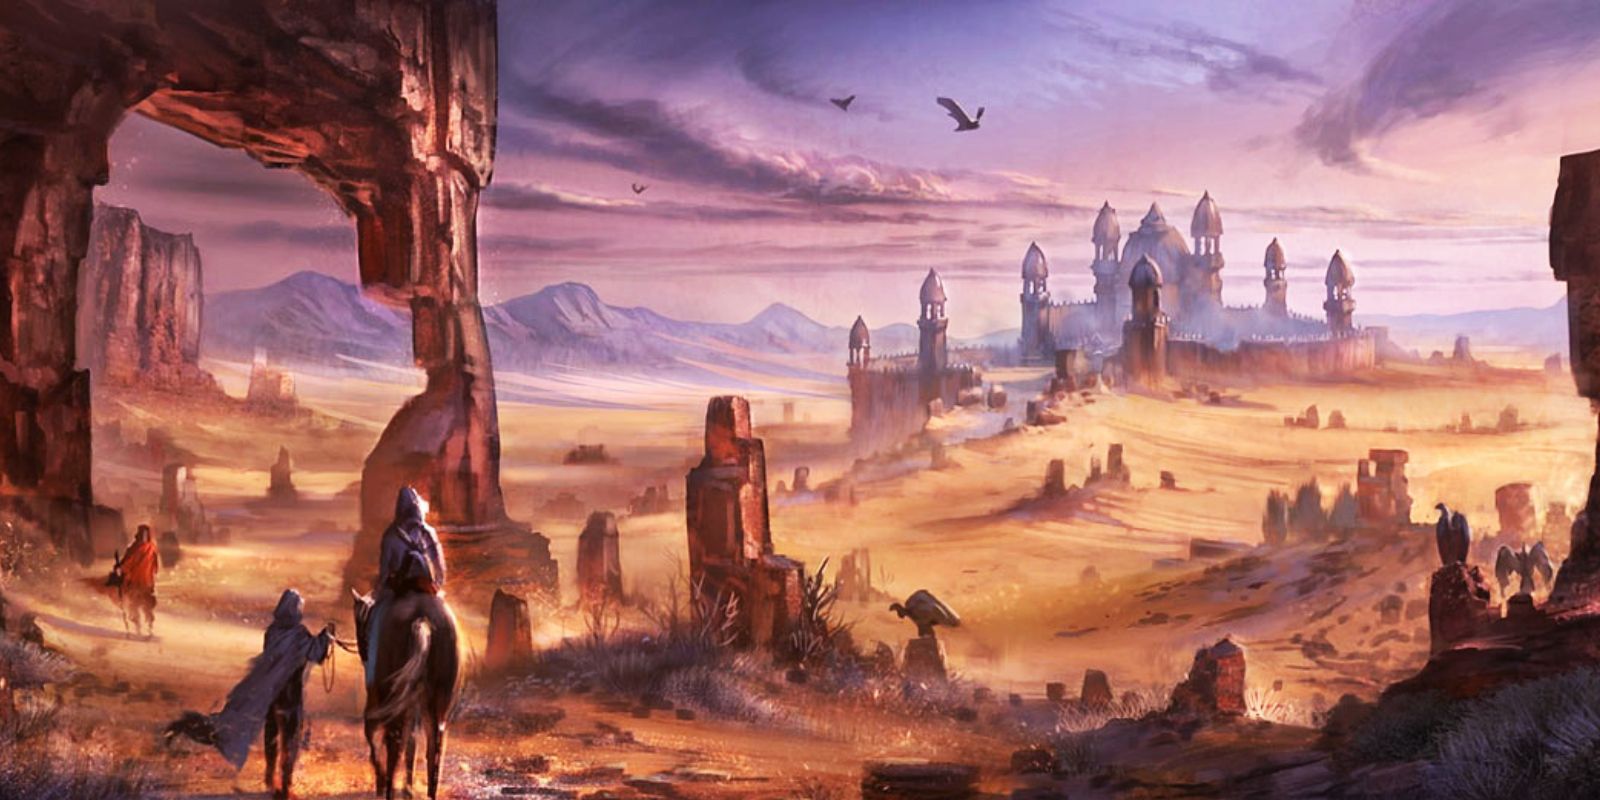 Arte conceitual do deserto Alik'r de Hammerfell em Elder Scrolls Online